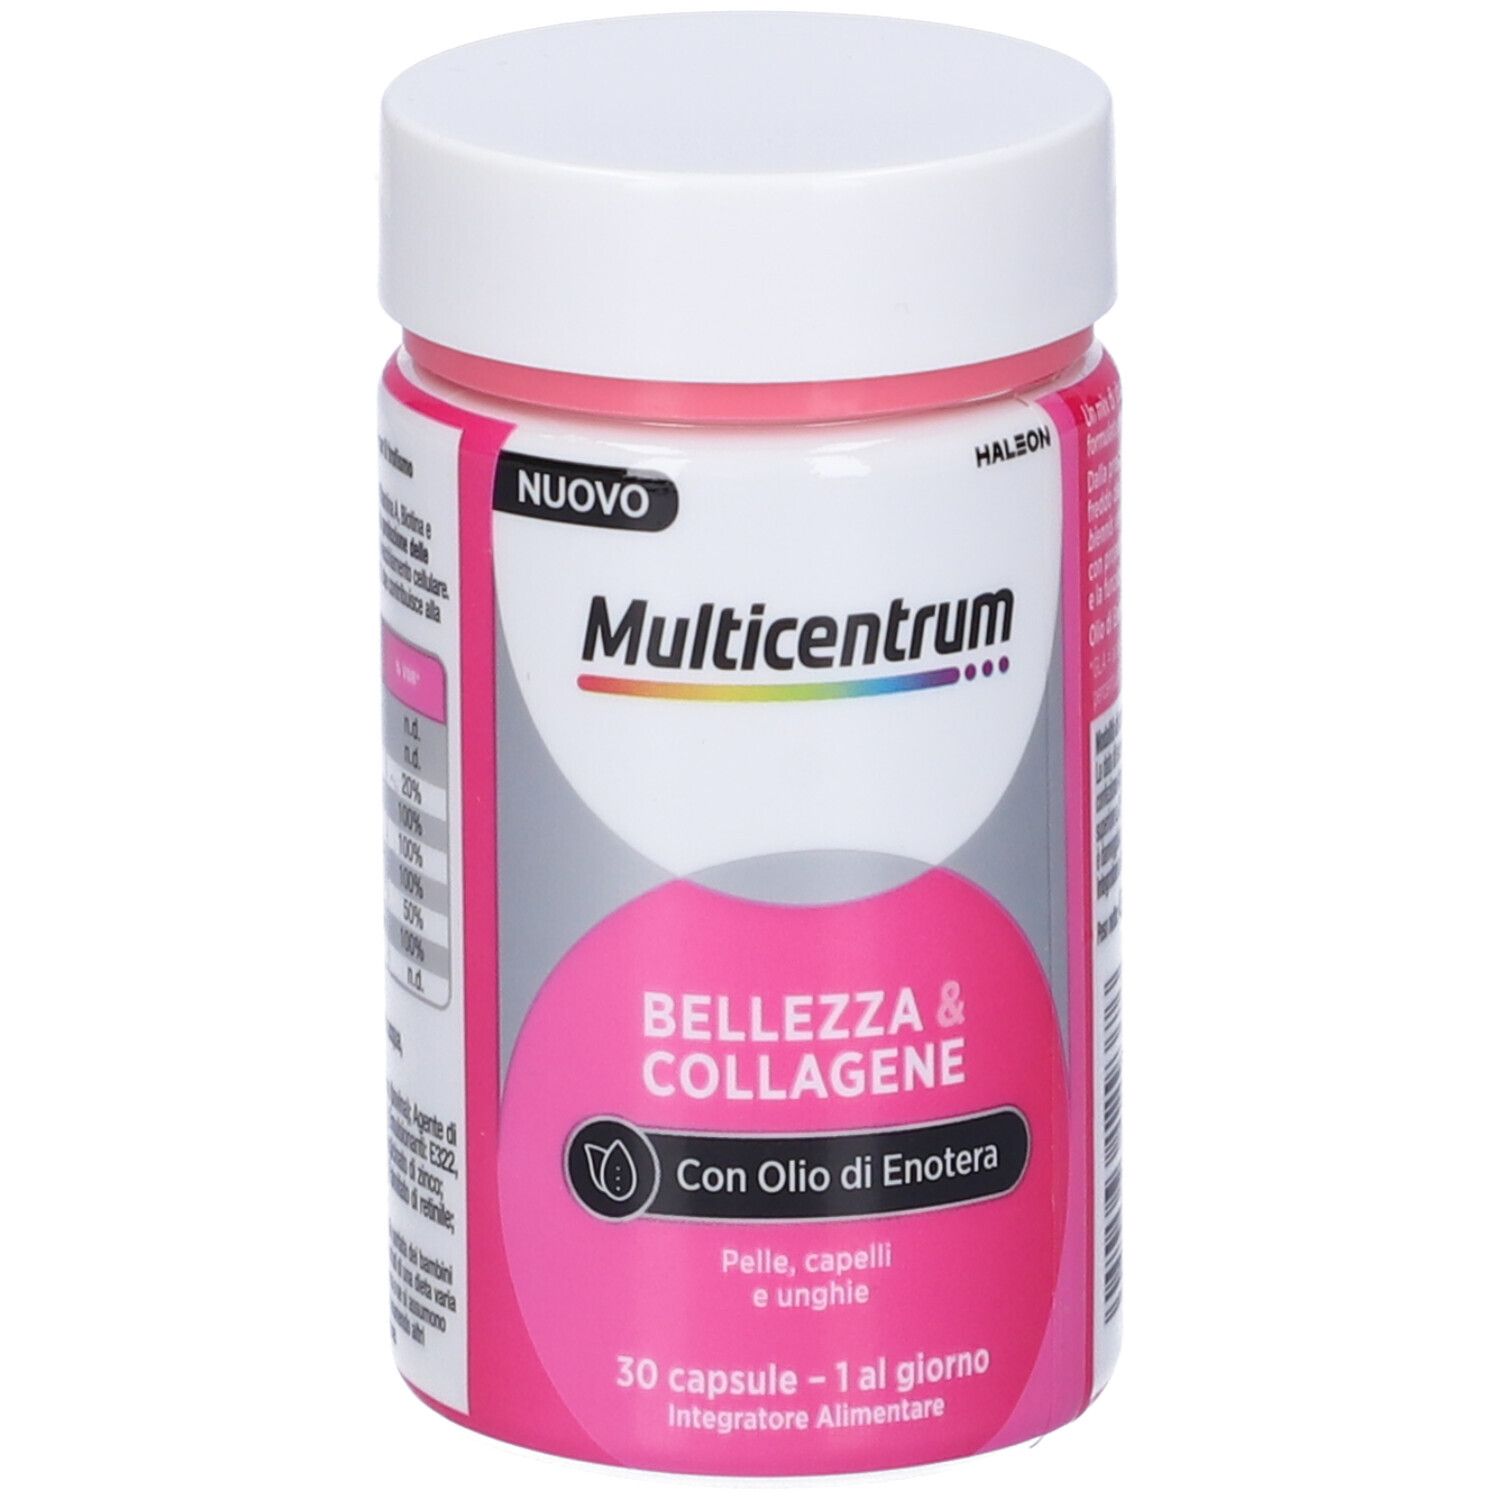 Multicentrum Bellezza & Collagene 42 g